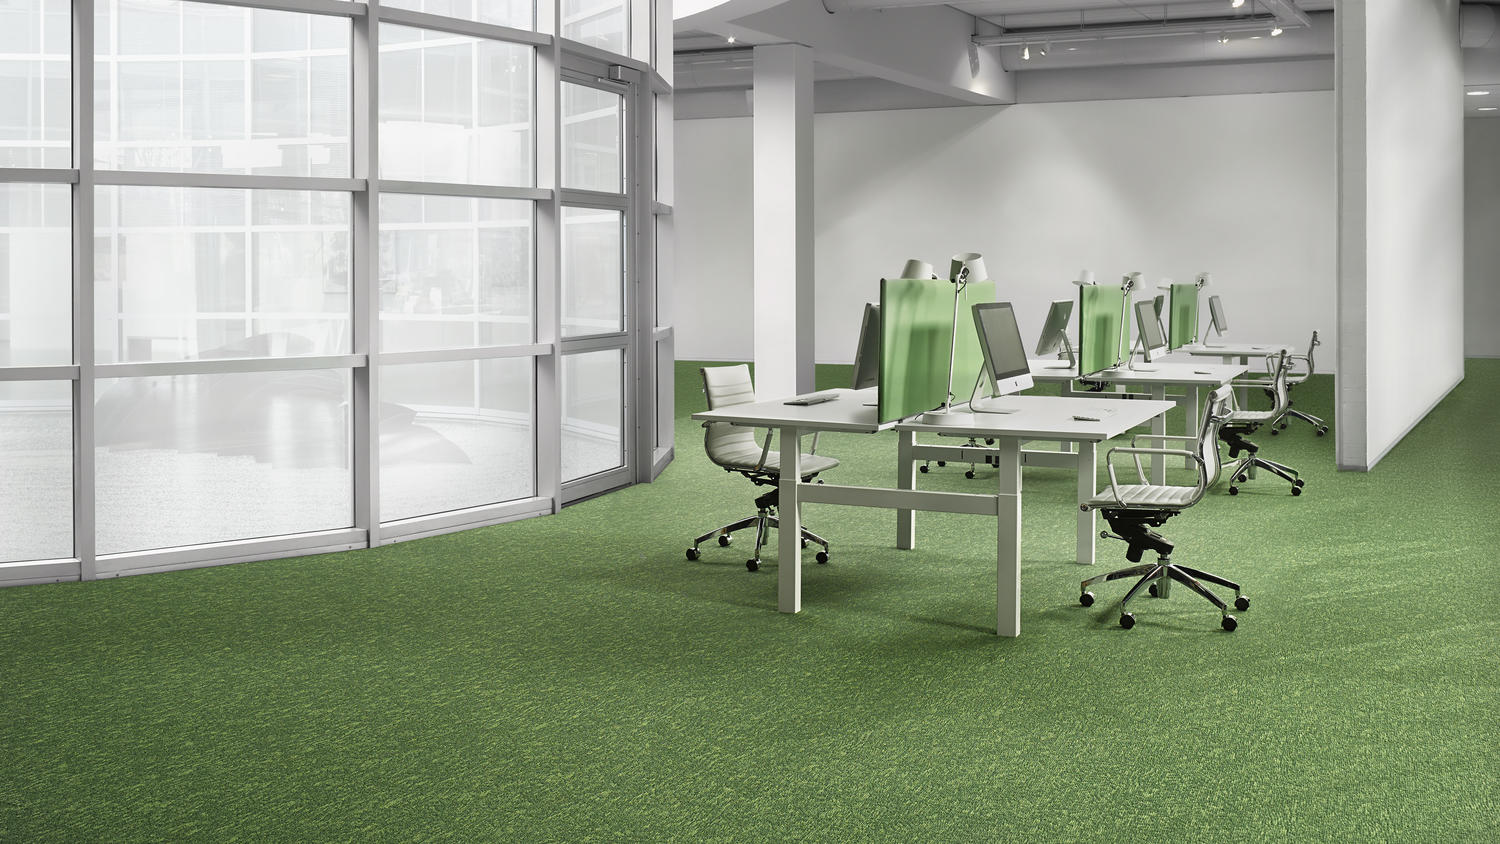 Desso Grain Carpet Tiles In An Office